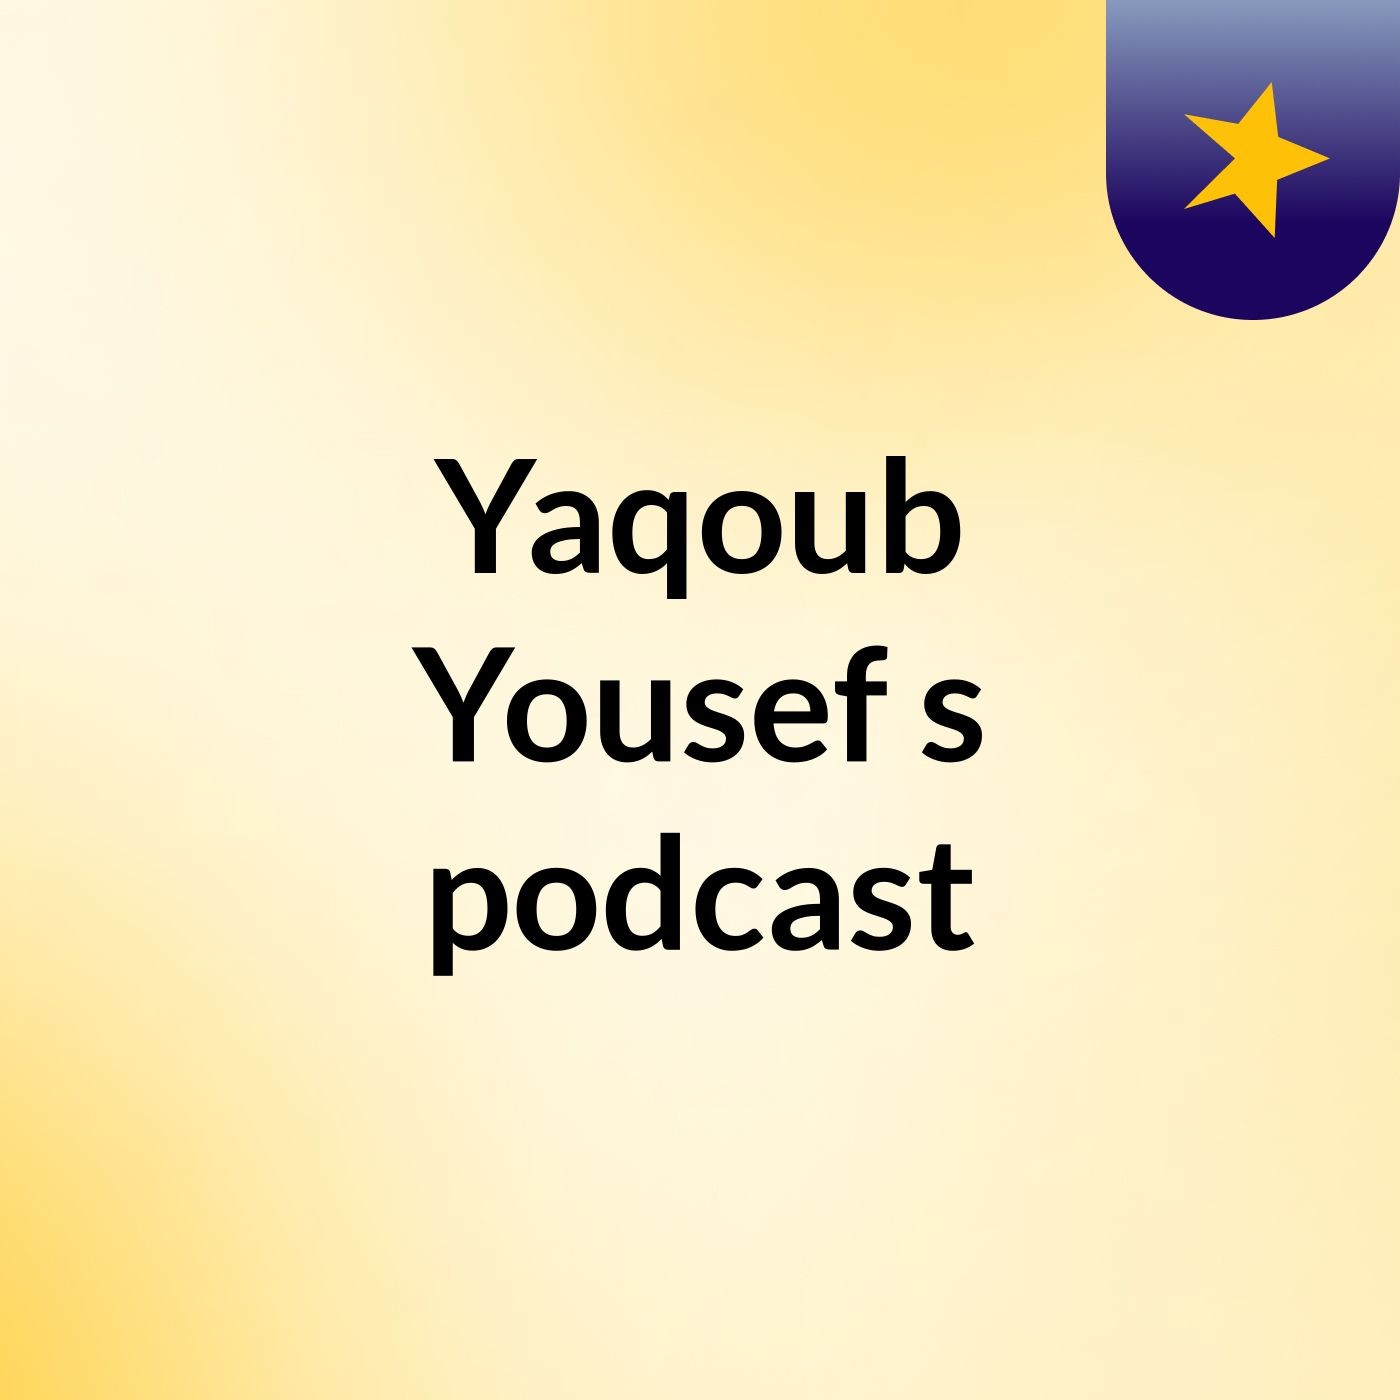 Yaqoub Yousef's podcast